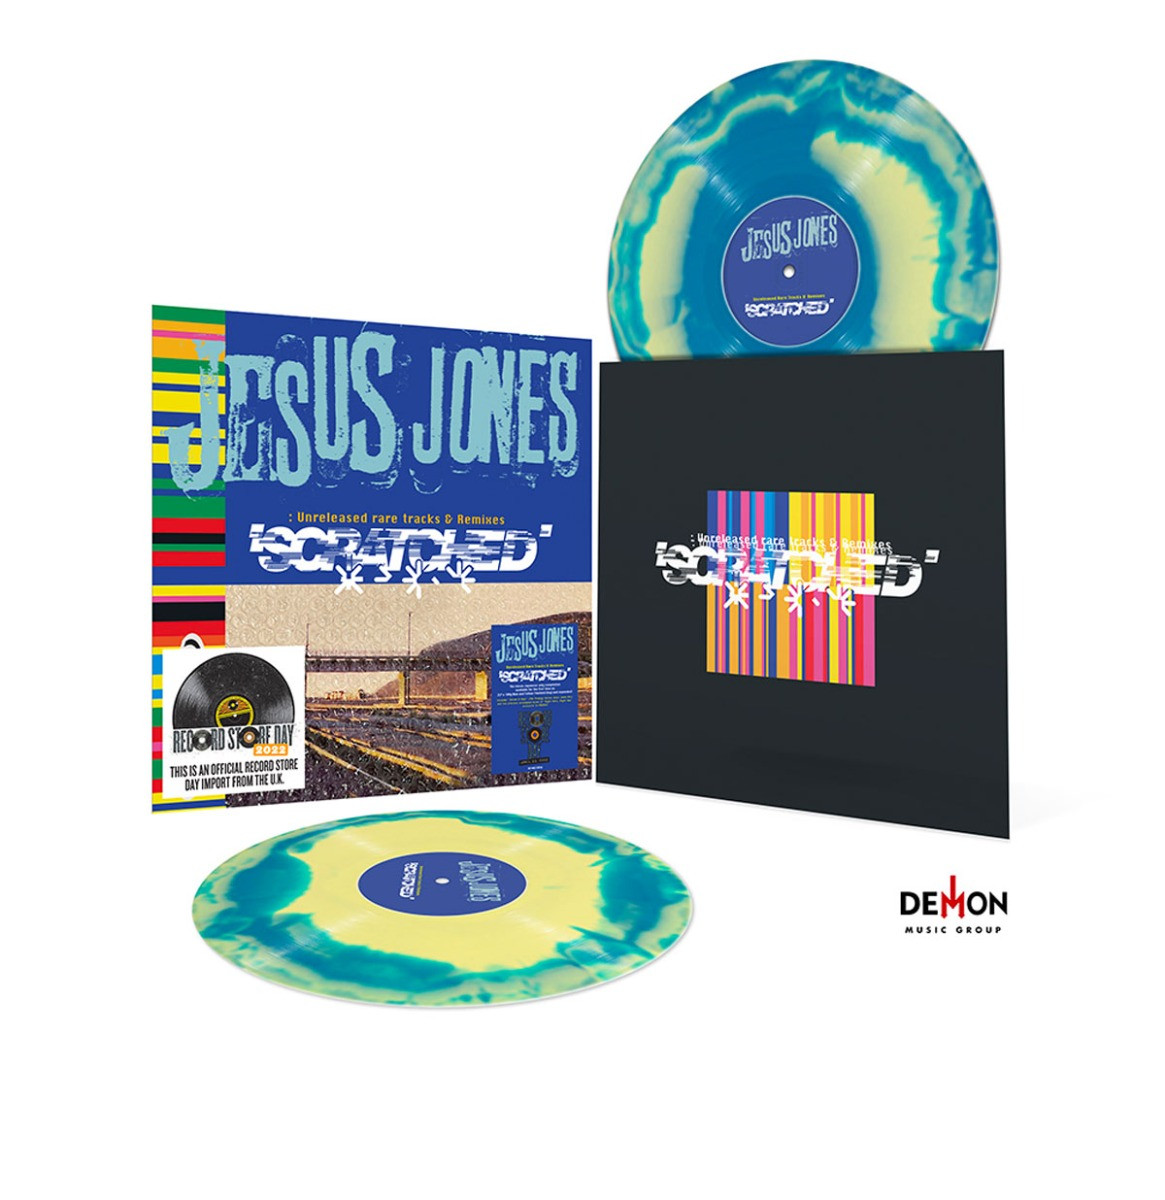 Jesus Jones - Scratched - Unreleased Rare Tracks & Remixes 2LP (Record Store Day 2022)